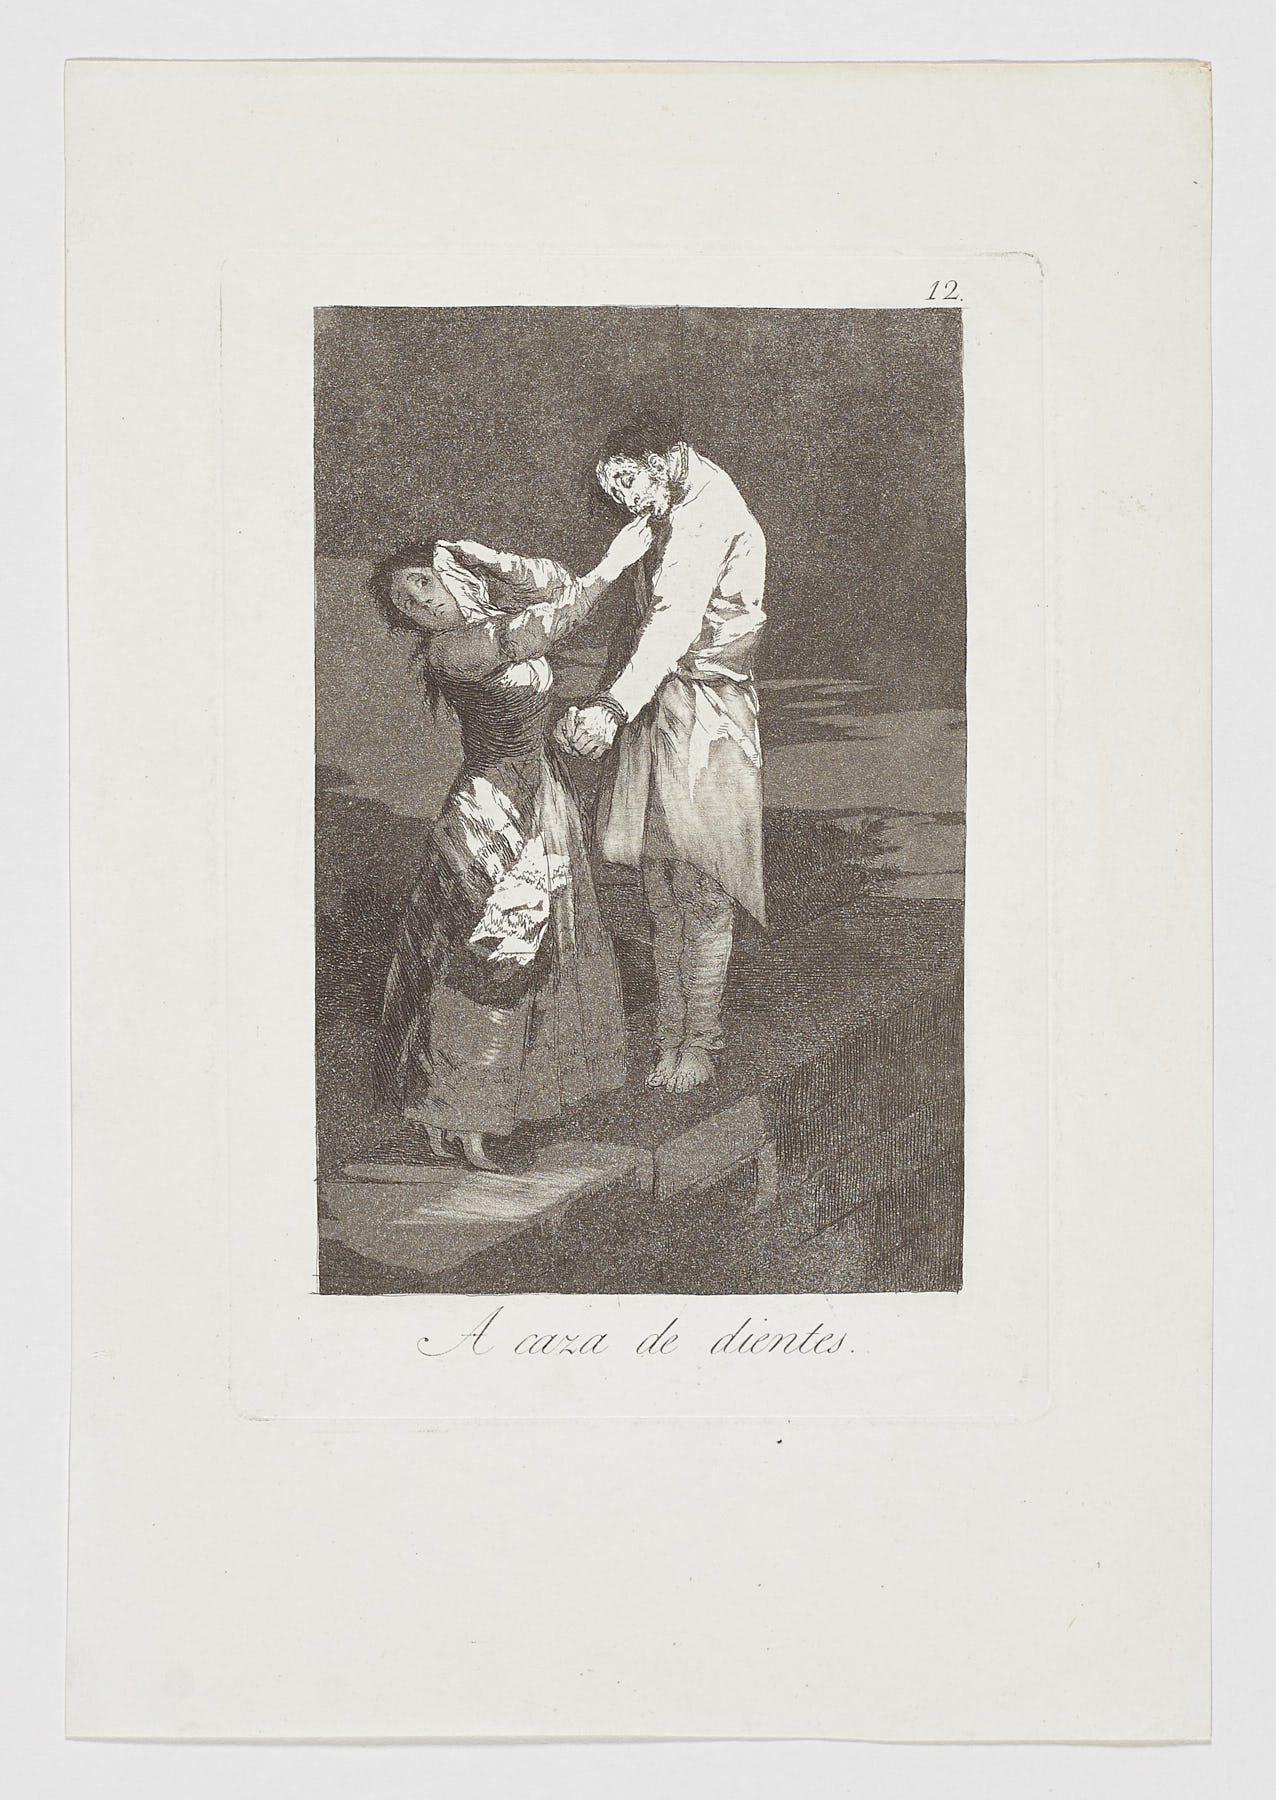 Francisco Goya Figurative Print - Francisco De Goya Caprichos A caza de dientes 2nd edition original art print 